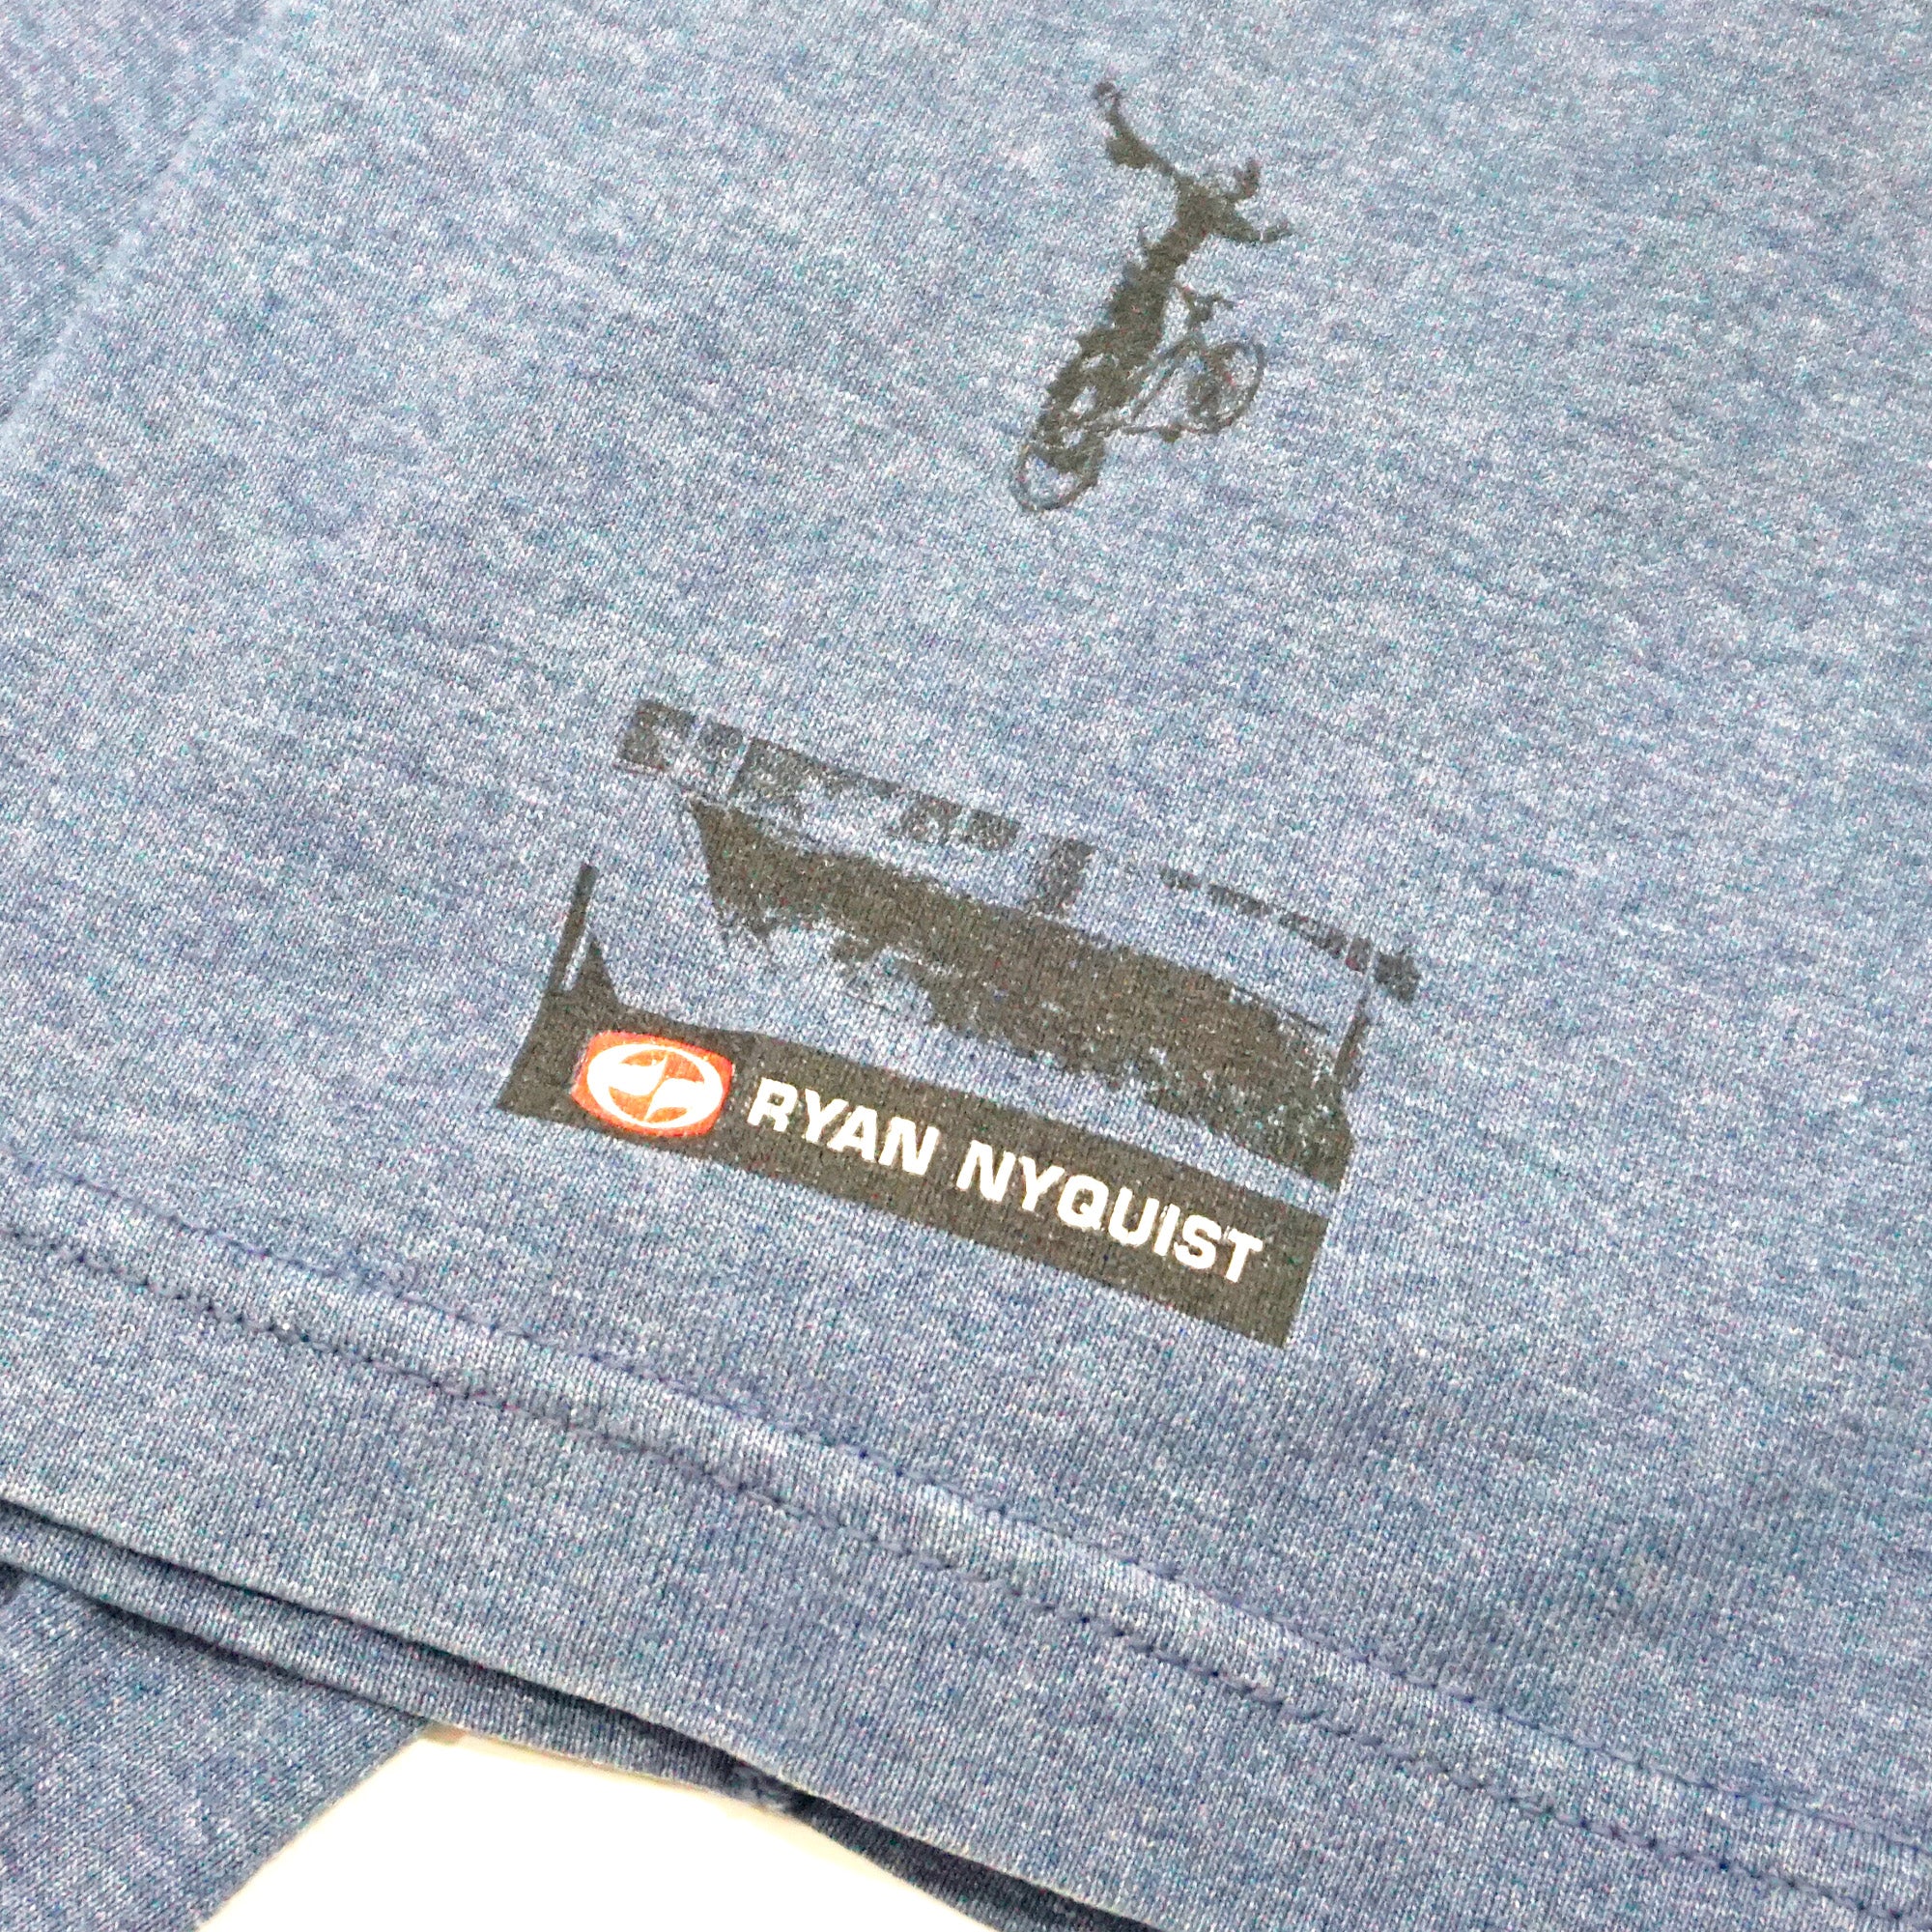 Split - Ryan Nyquist Shirt (L)